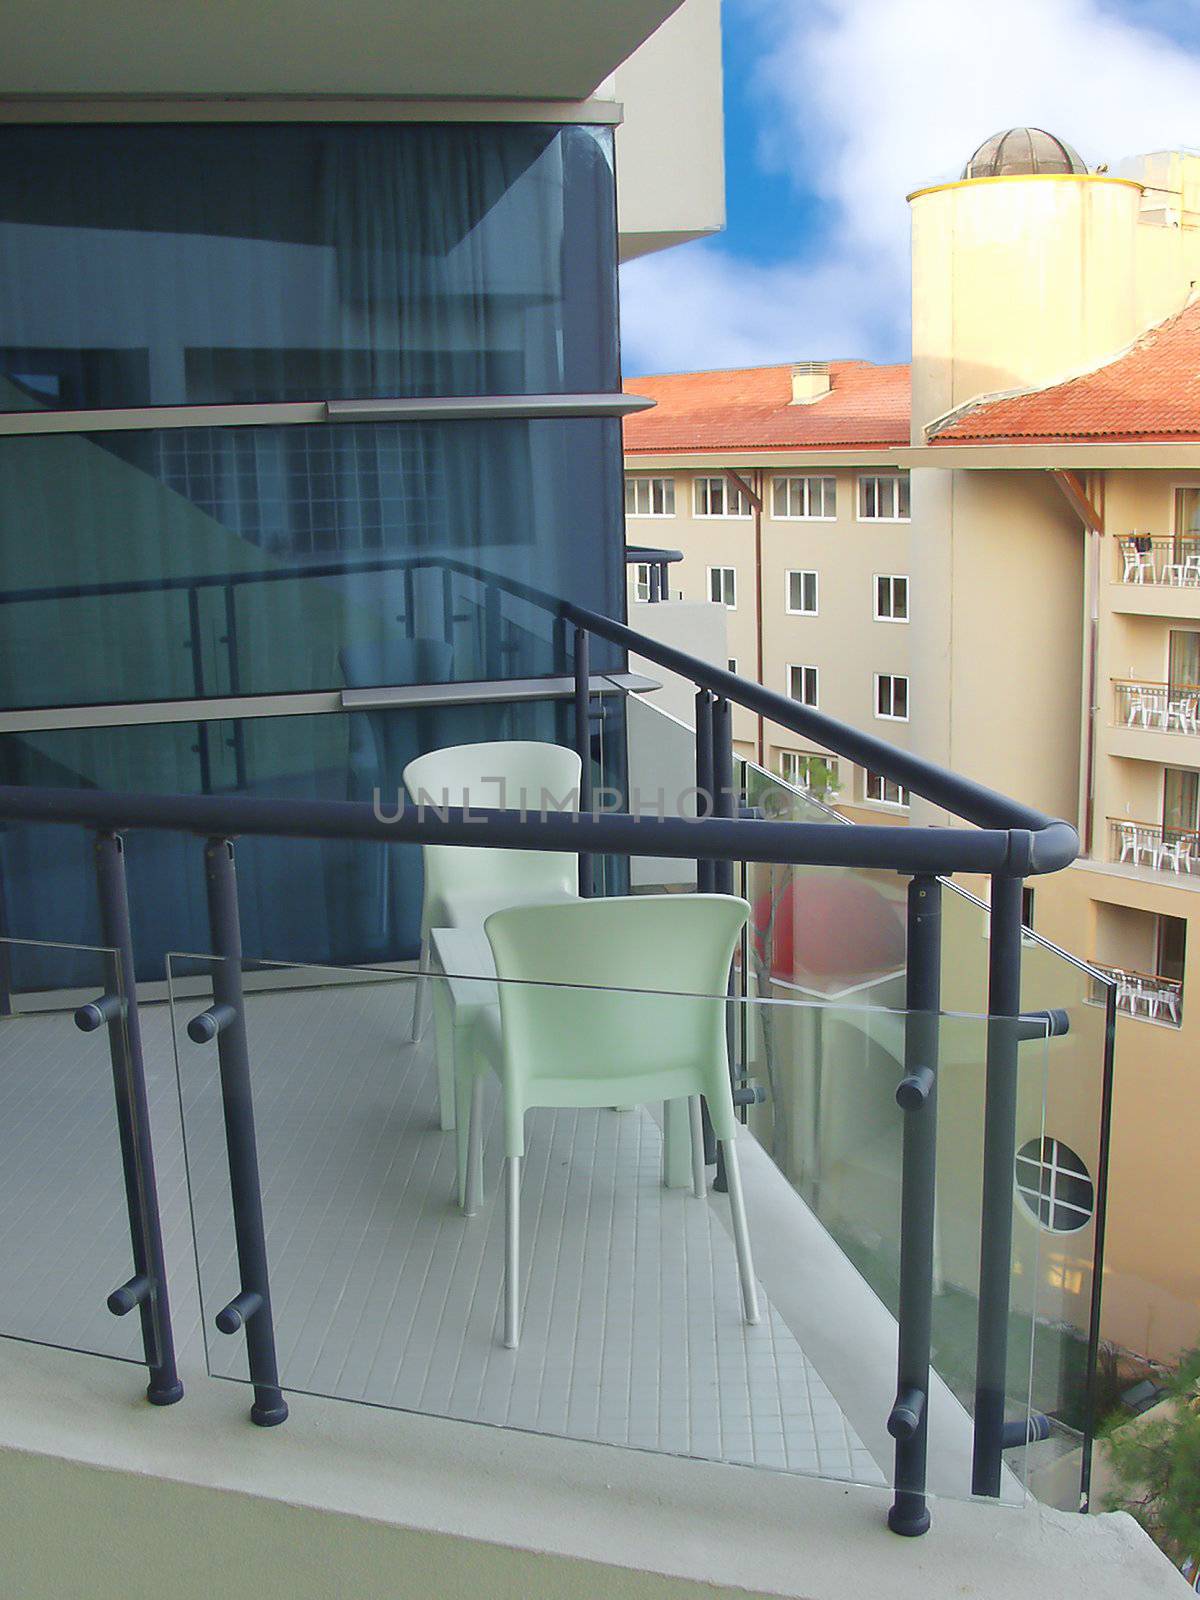 Balcony of a modern building